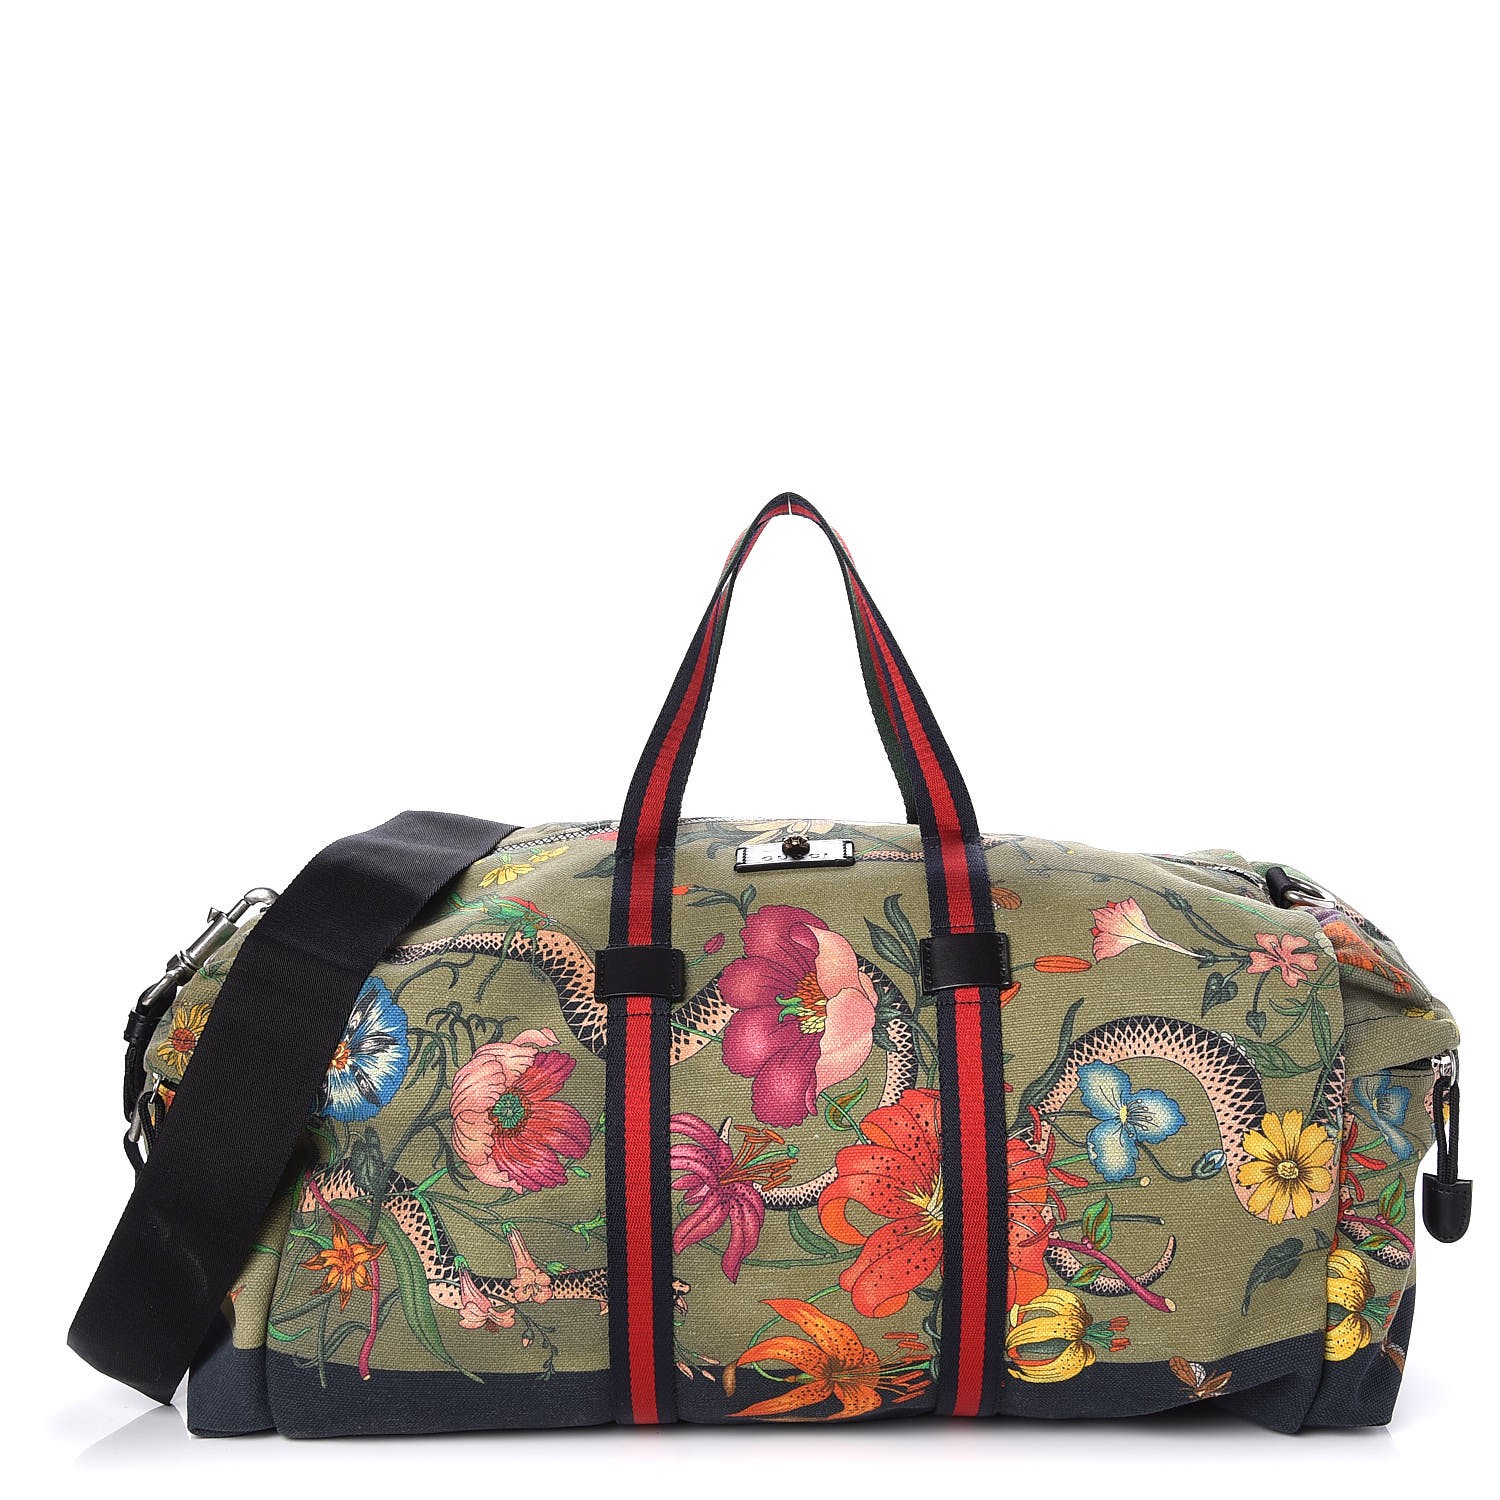 gucci floral duffle bag